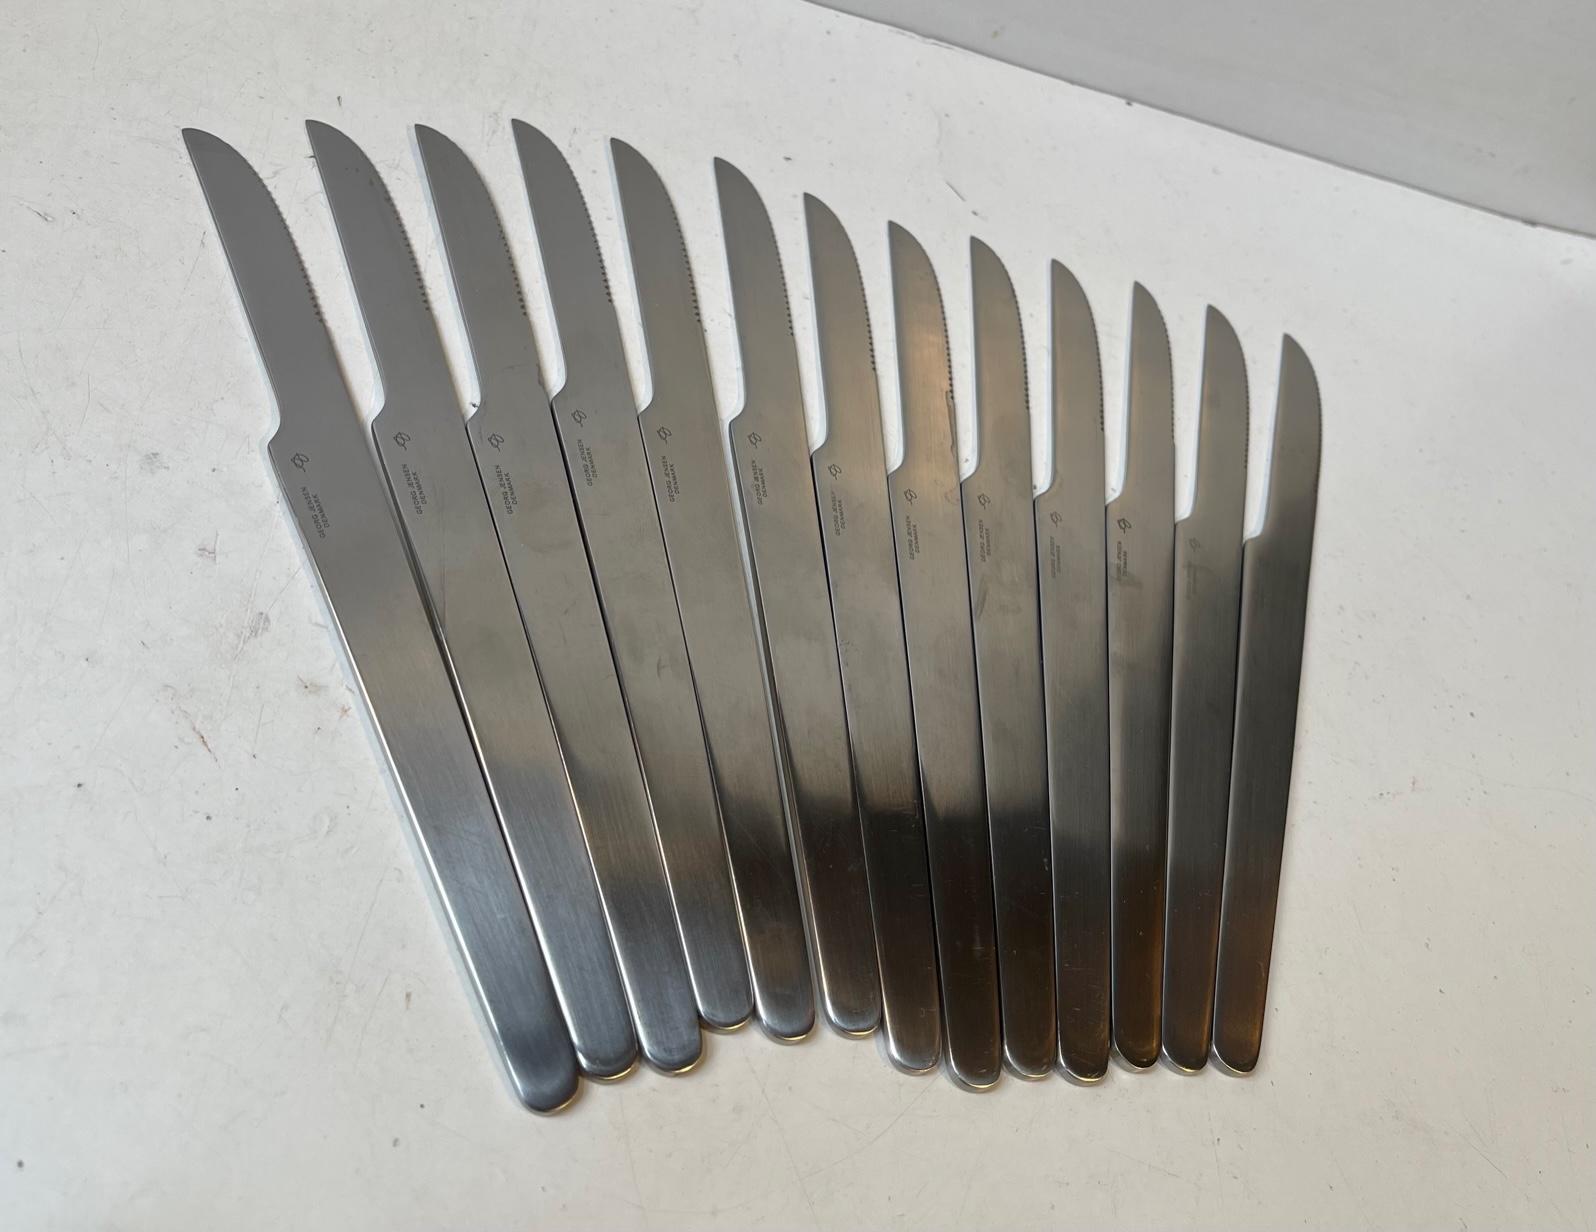 Arne Jacobsen Stainless Cutlery Flatware Set for Georg Jensen, 12 Persons 1